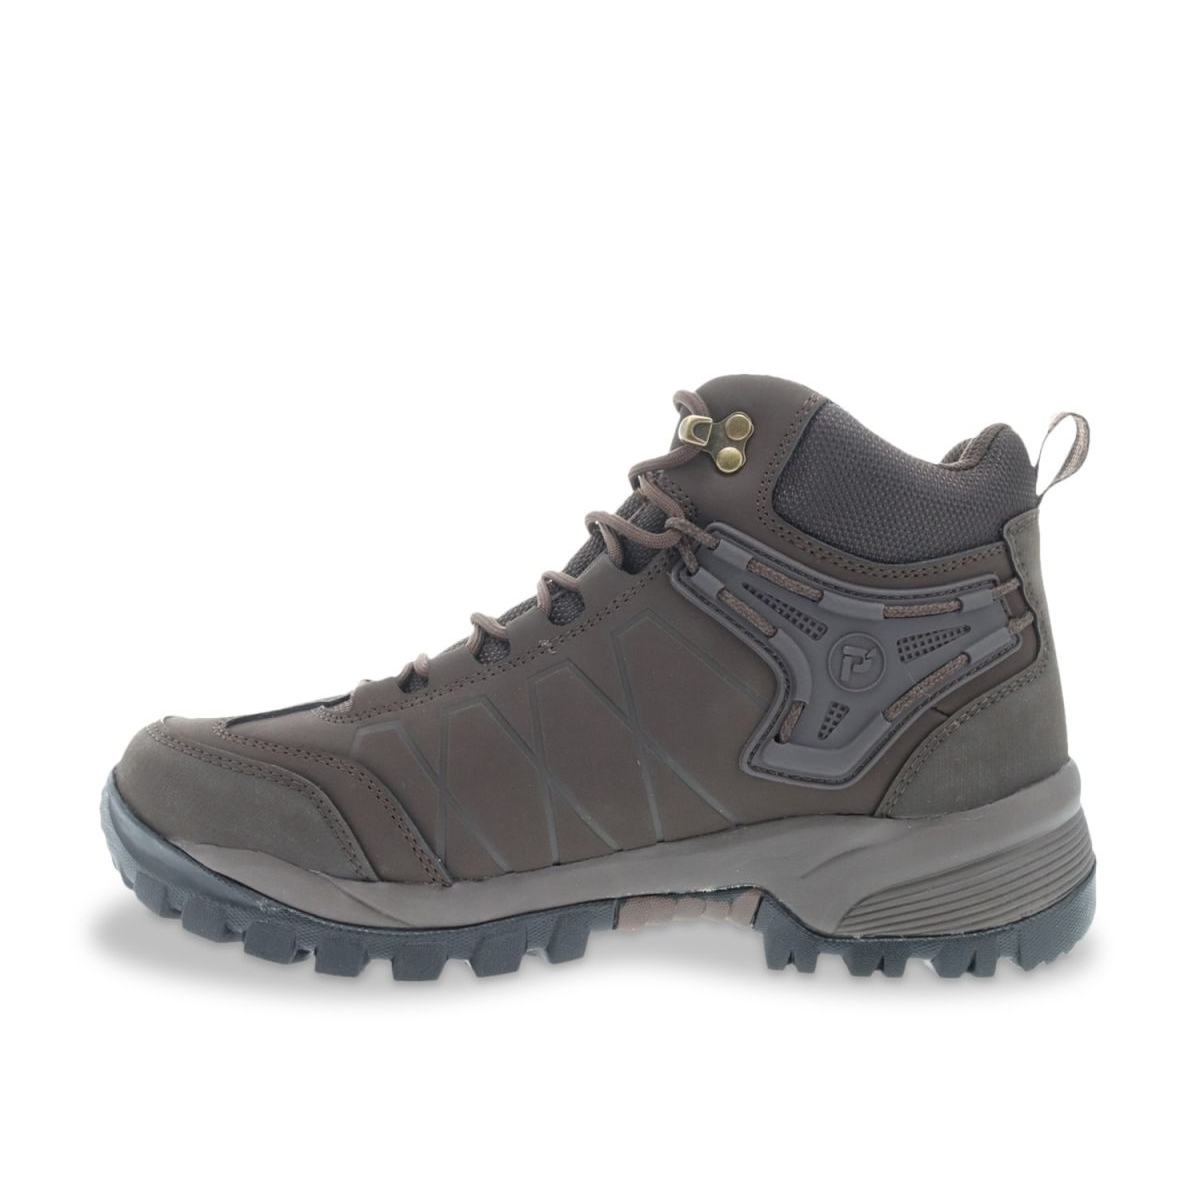 Propet Men's Ridge Walker Force Hiking Boots Dark Brown - MBA052LBR BROWN - BROWN, 10.5 XX-Wide